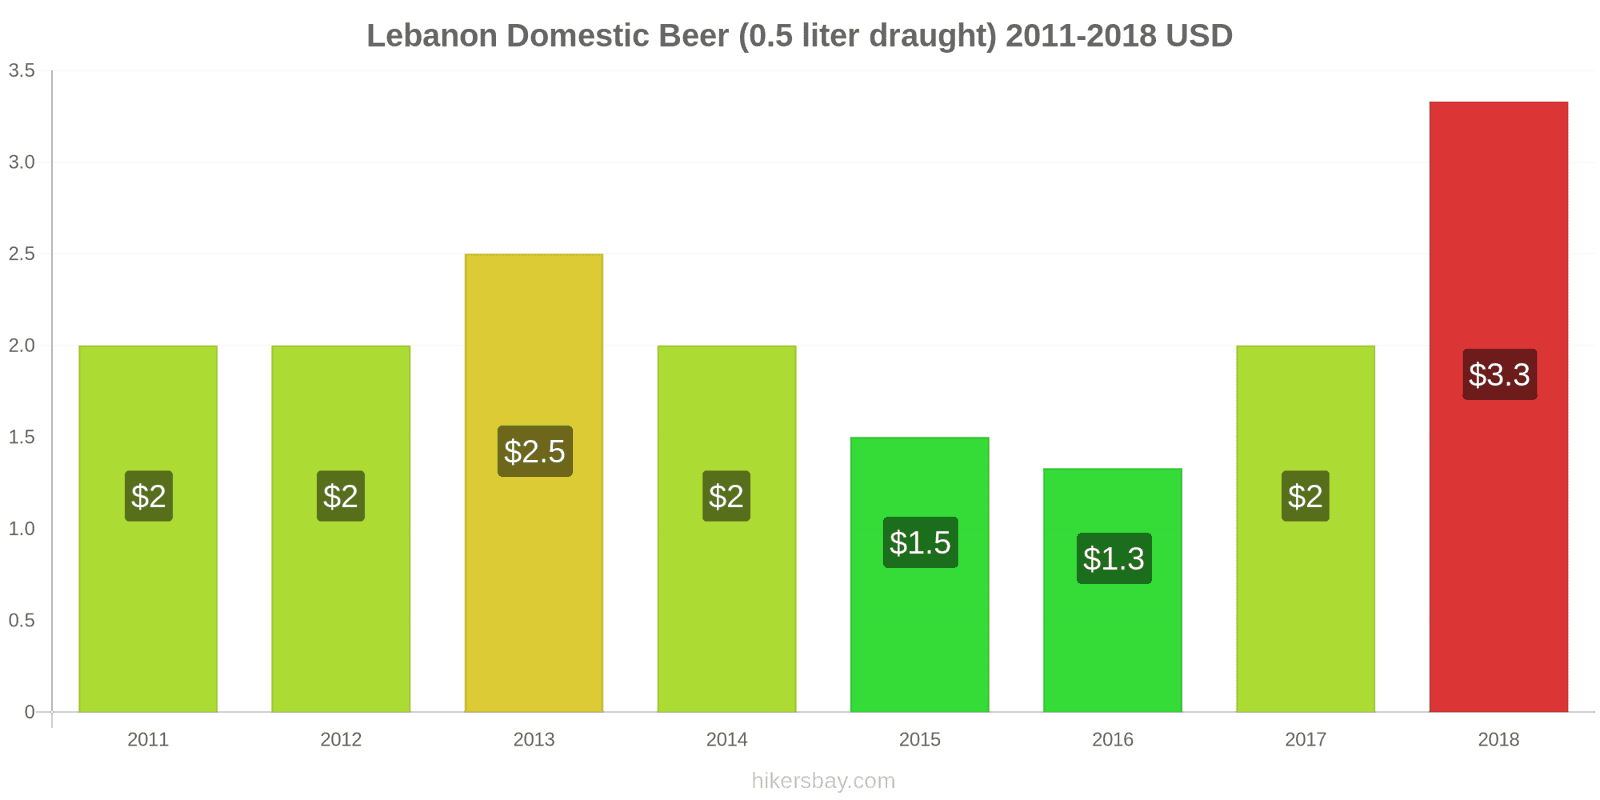 Lebanon price changes Domestic Beer (0.5 liter draught) hikersbay.com